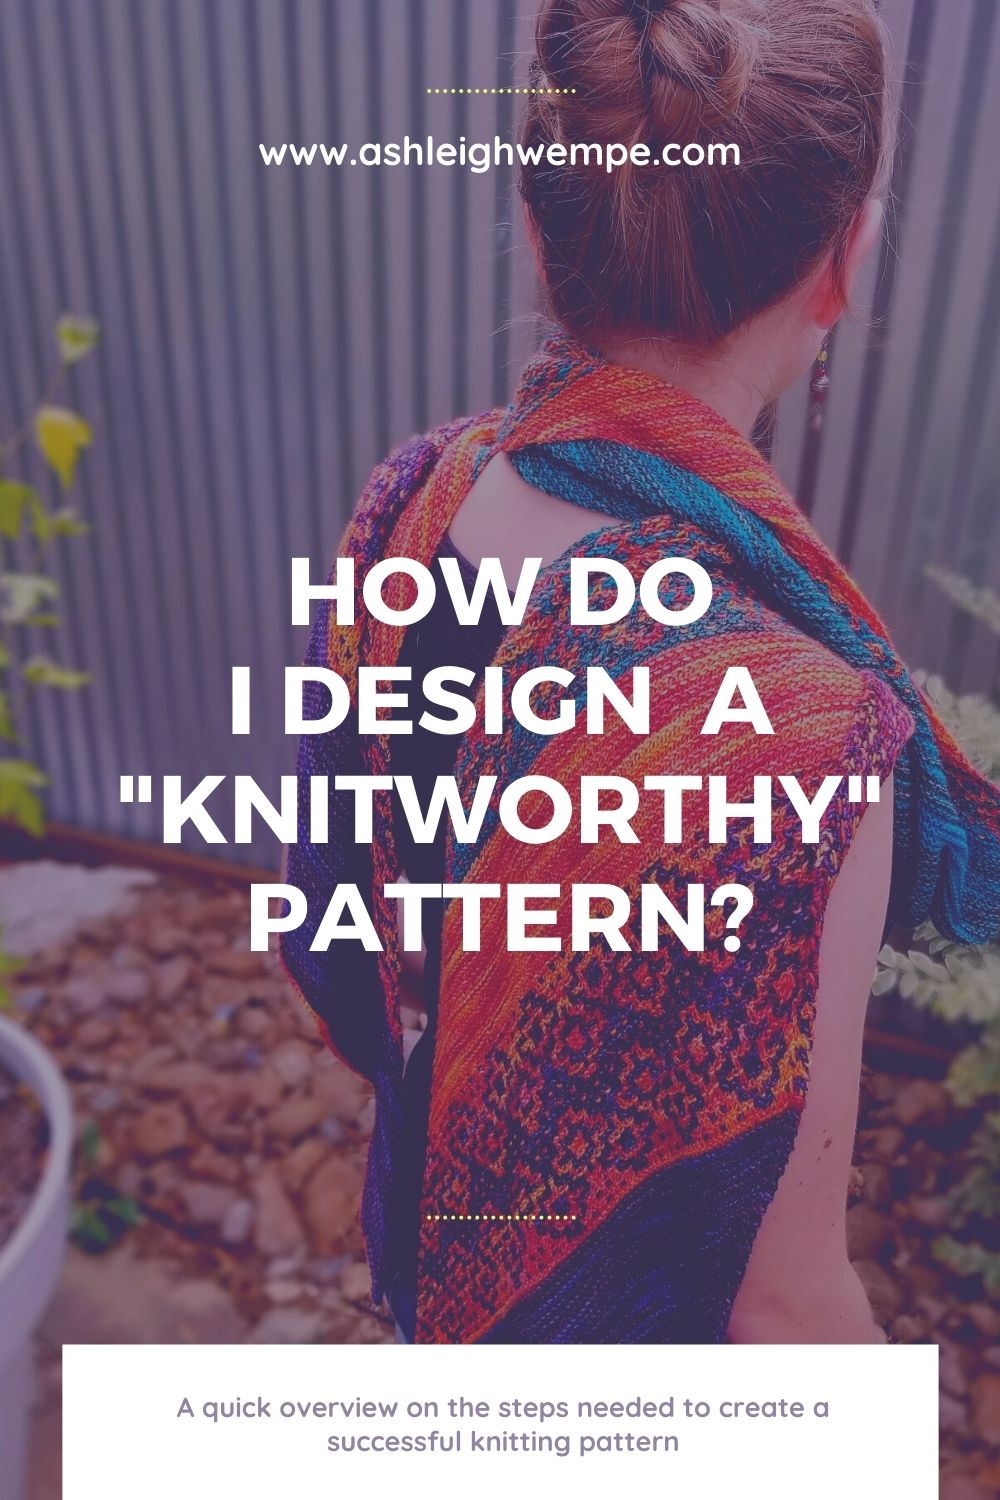 How do I publish a "knitworthy" knitting pattern?